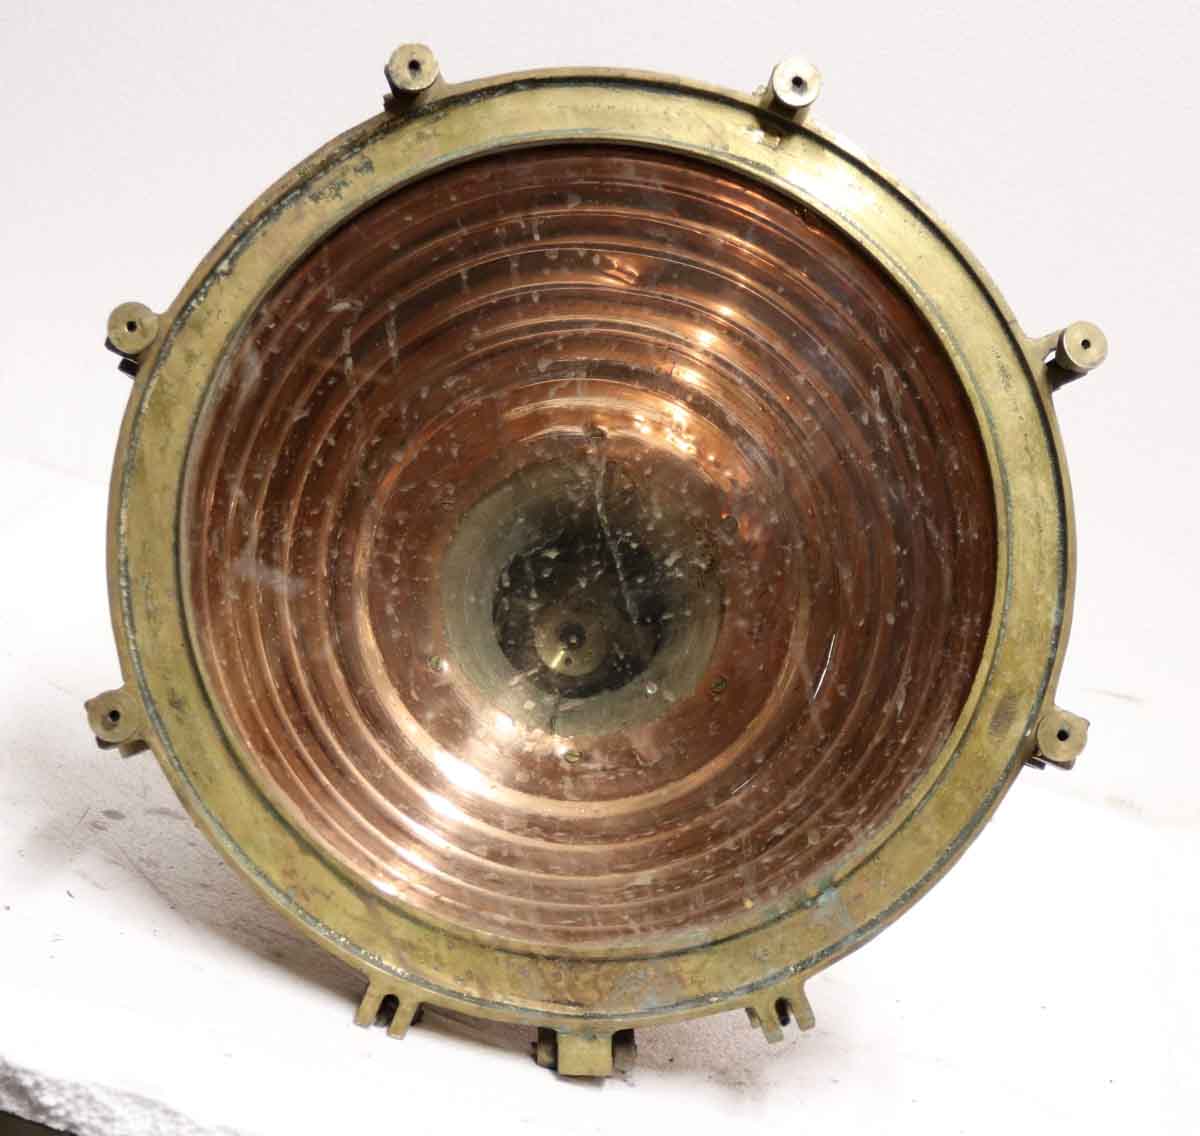 Vintage Copper & Brass Beehive Ship Pendant Light